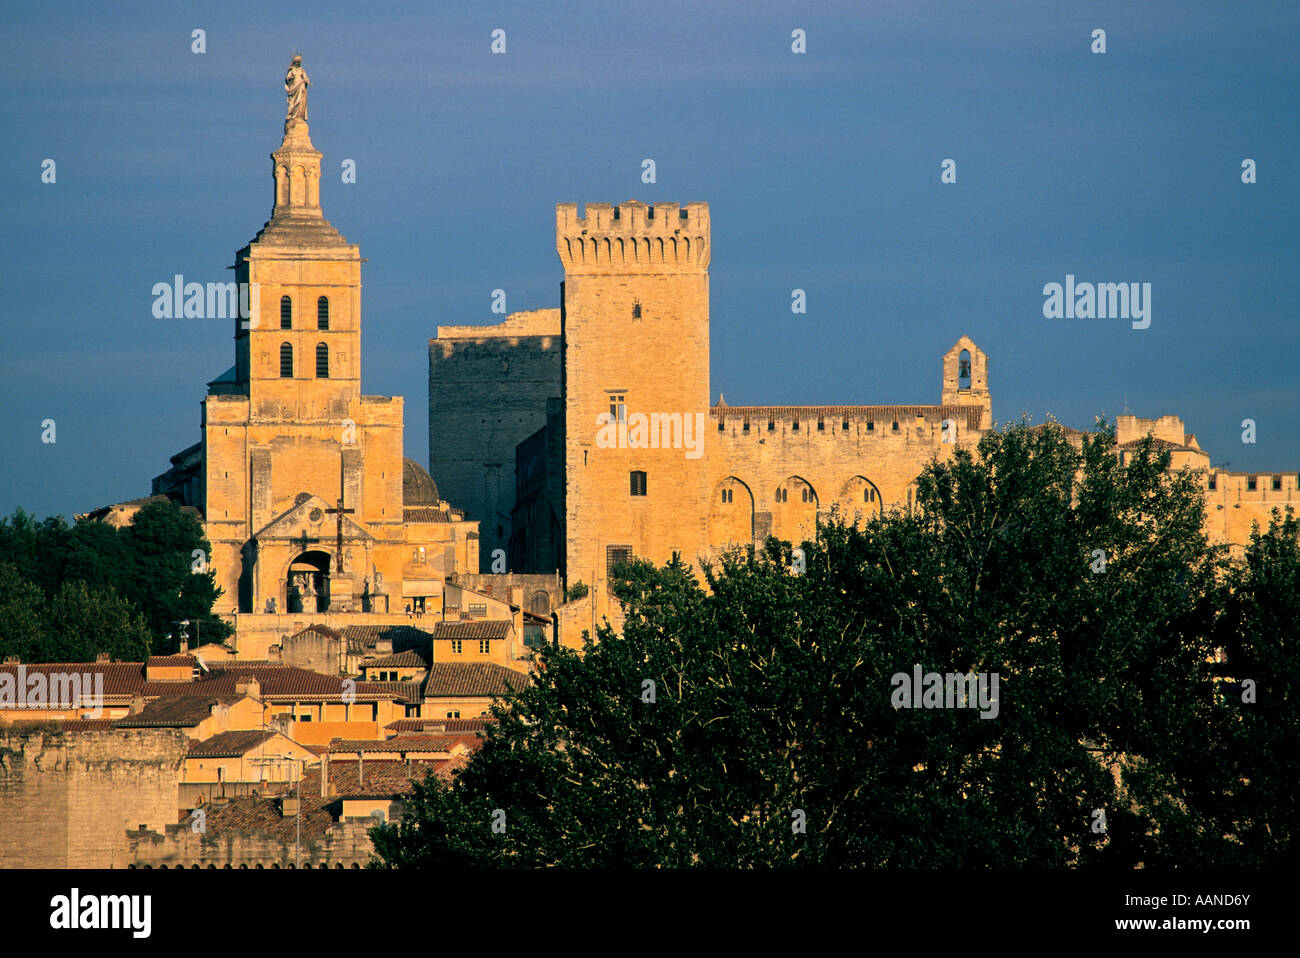 Avignon, France - Palais des Papes, Palace of the Popes, Avignon, France, Europe Stock Photo